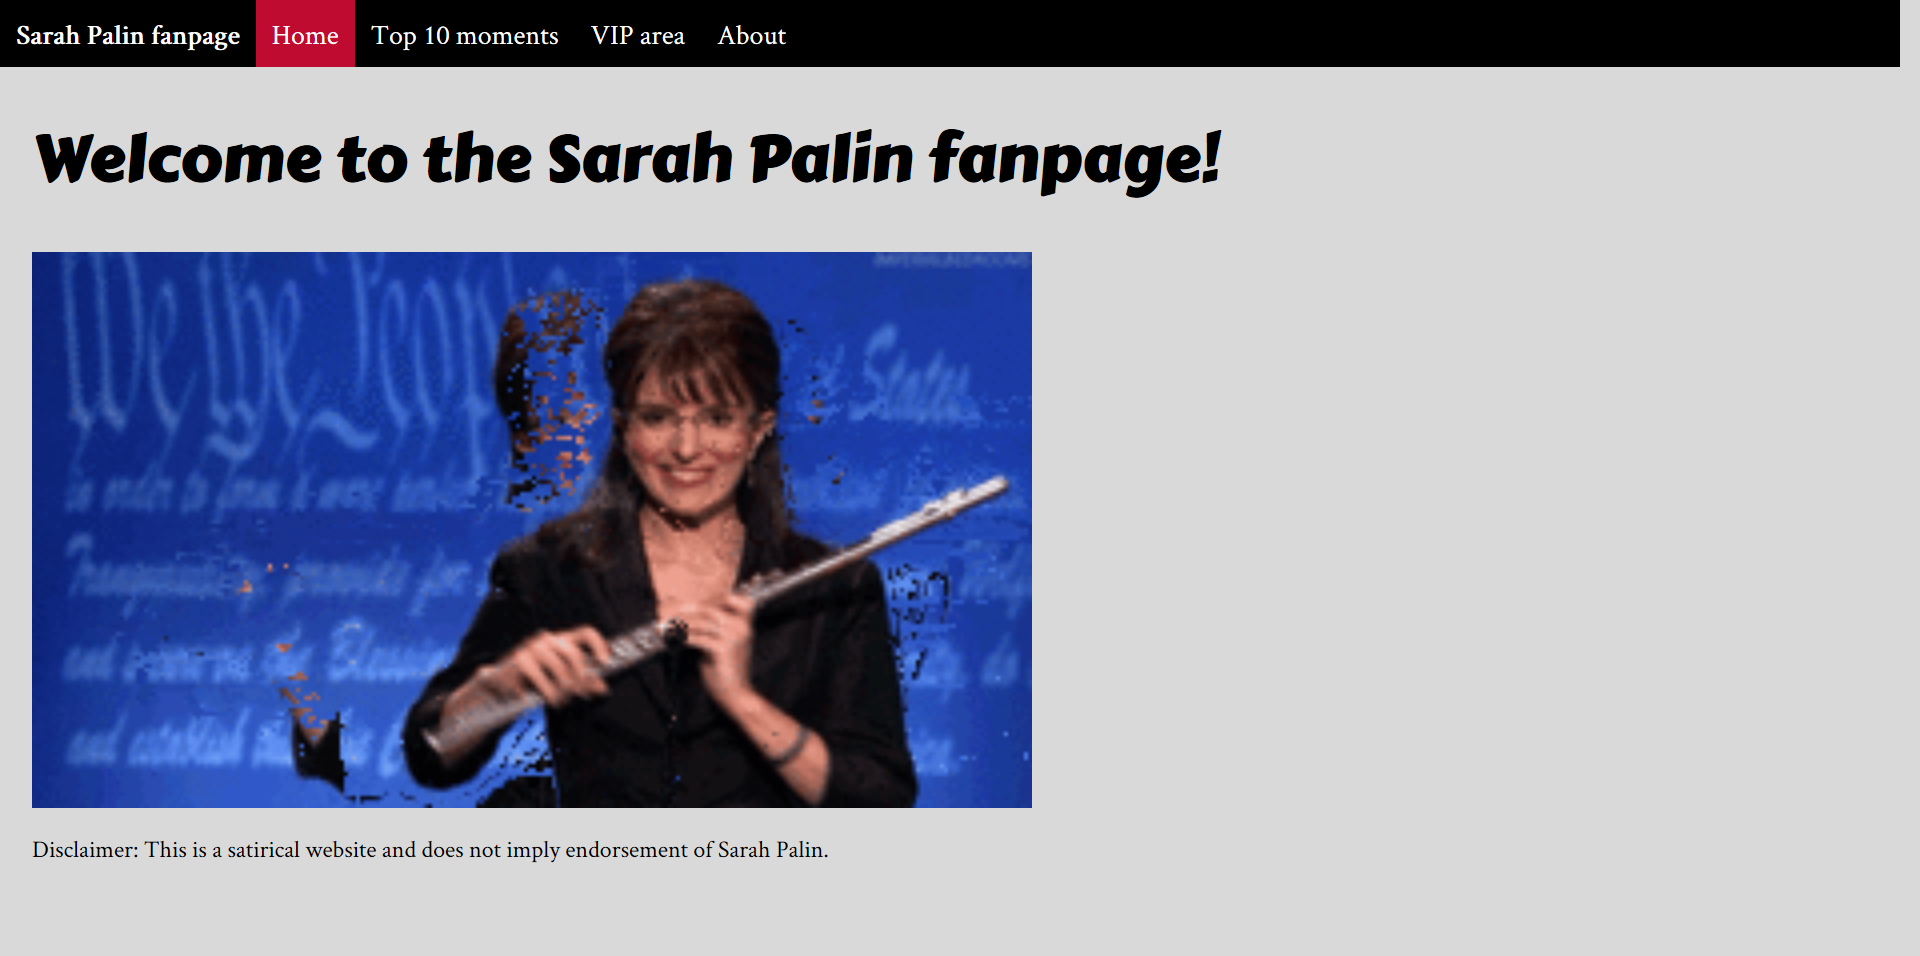 sarahpalinfanpage_homepage.png